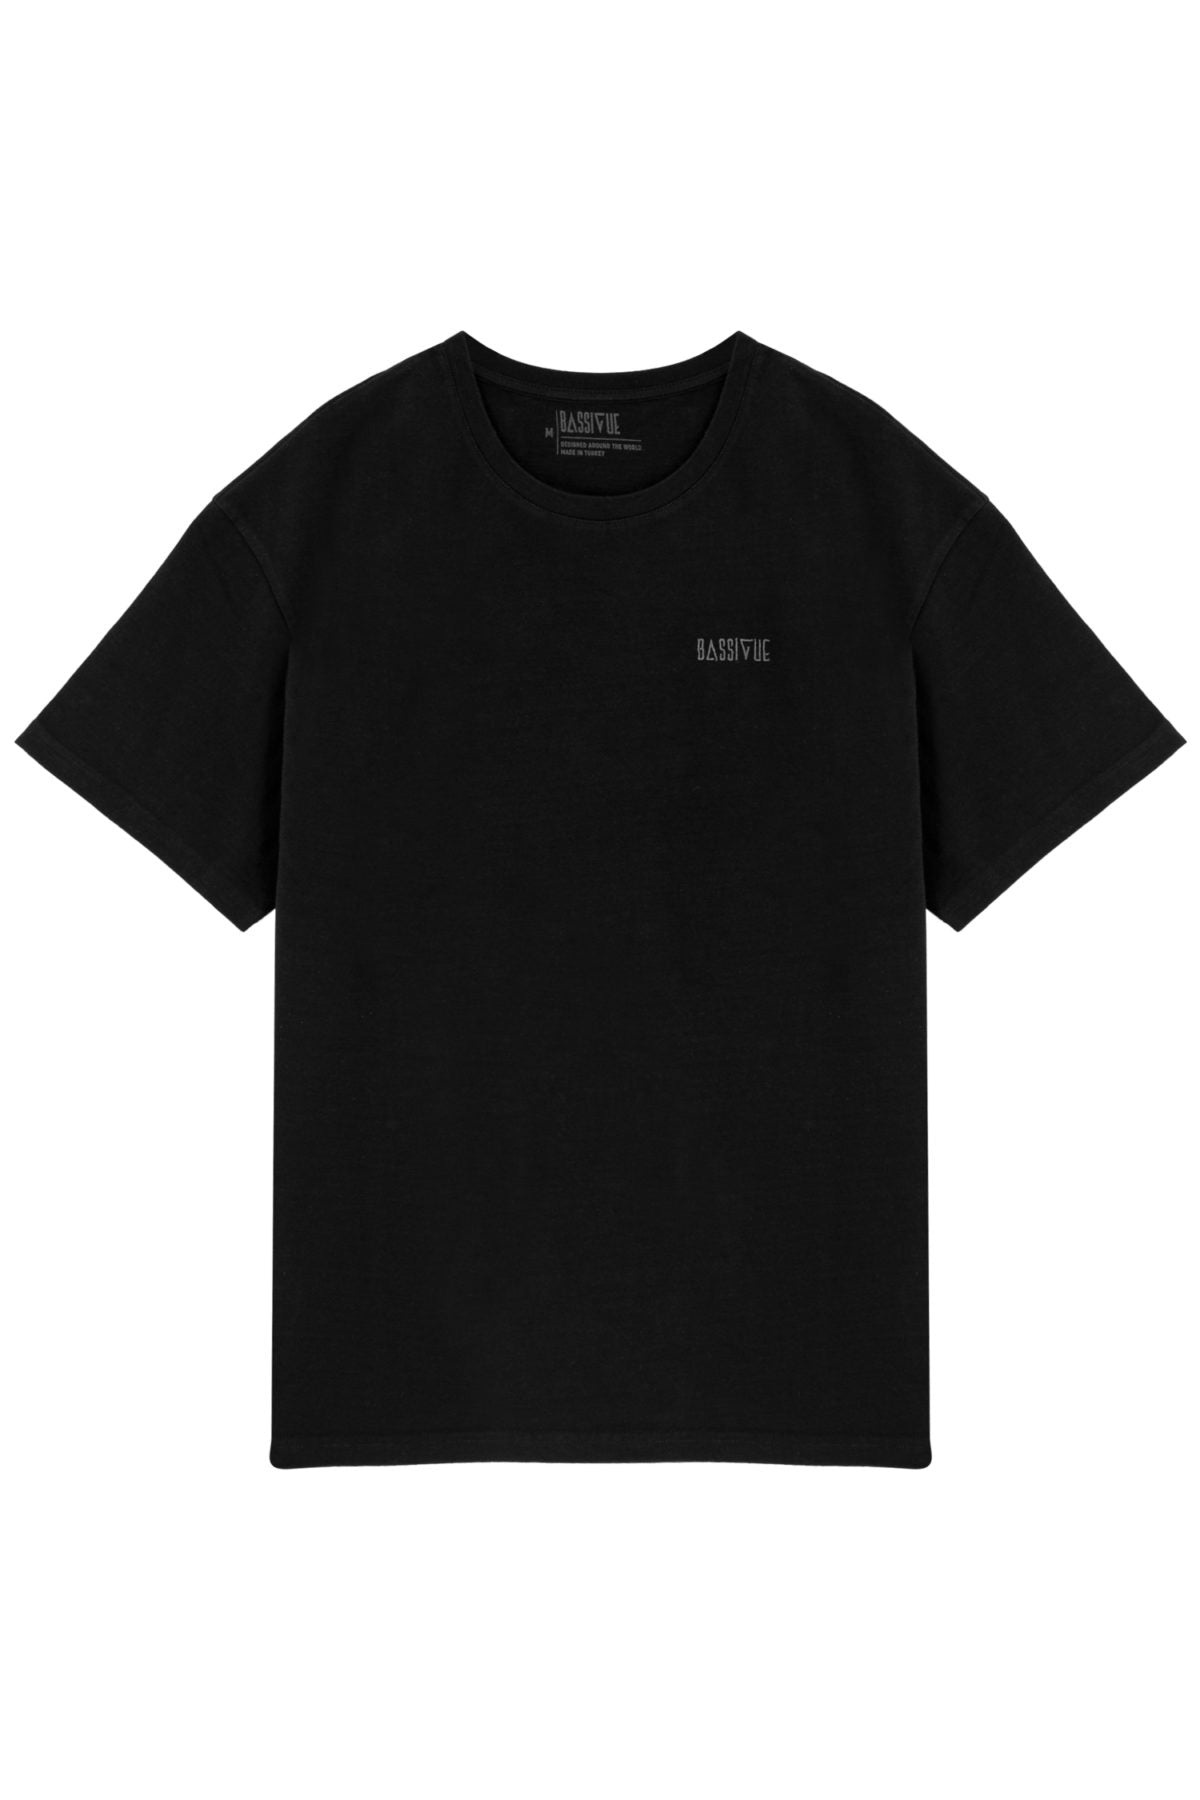 High Density T-Shirt - Black